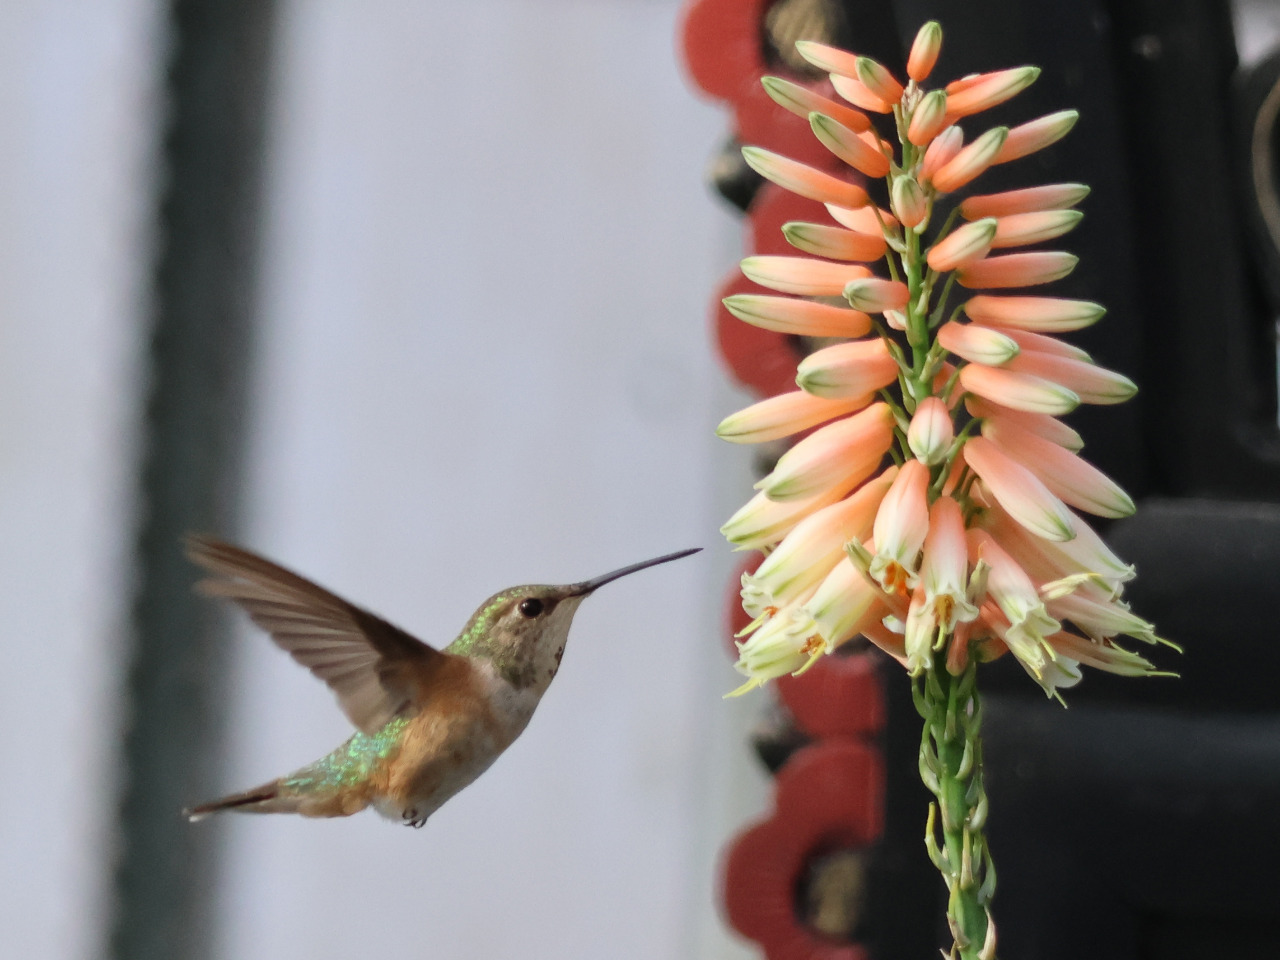 Columbus the Hummingbird nectaring on flowers